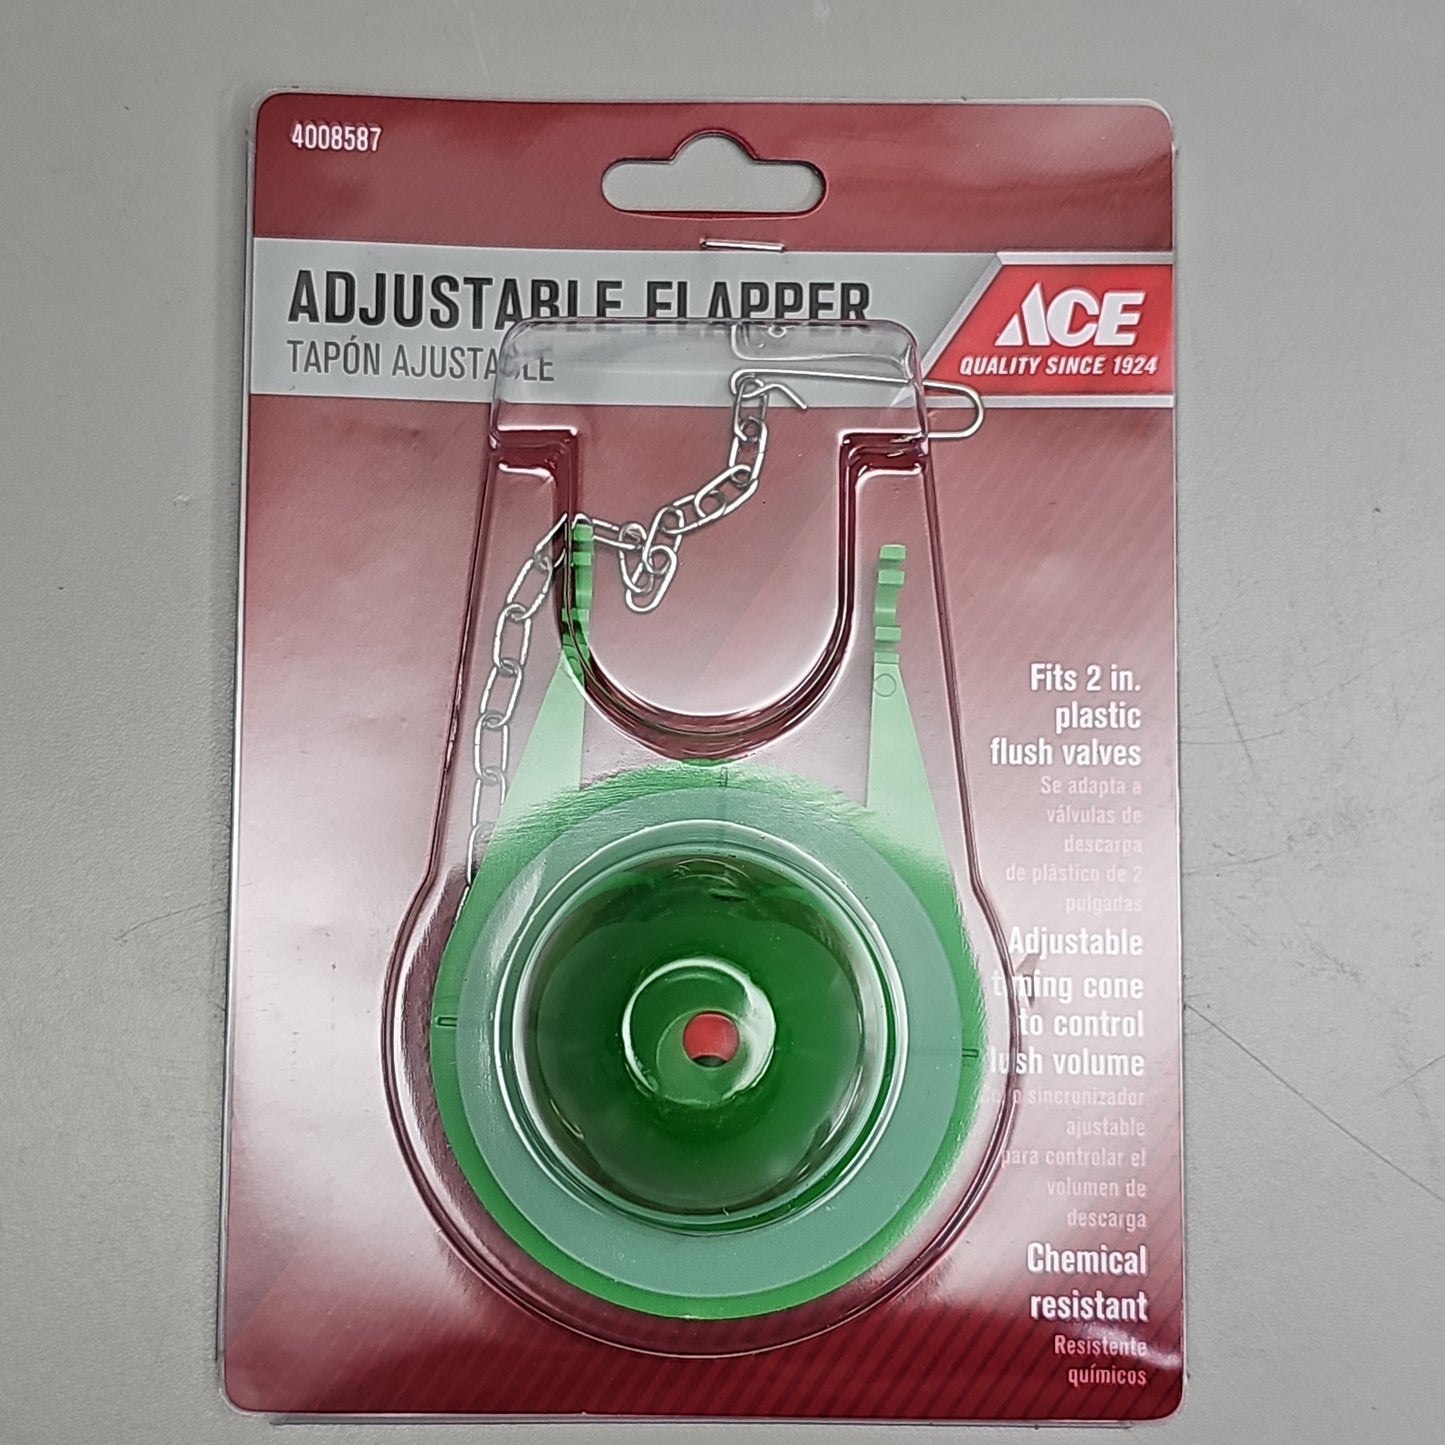 ACE Adjustable Flapper for Toilet Plastic 2" 4-Pk ACE836-79 4008587 (New)